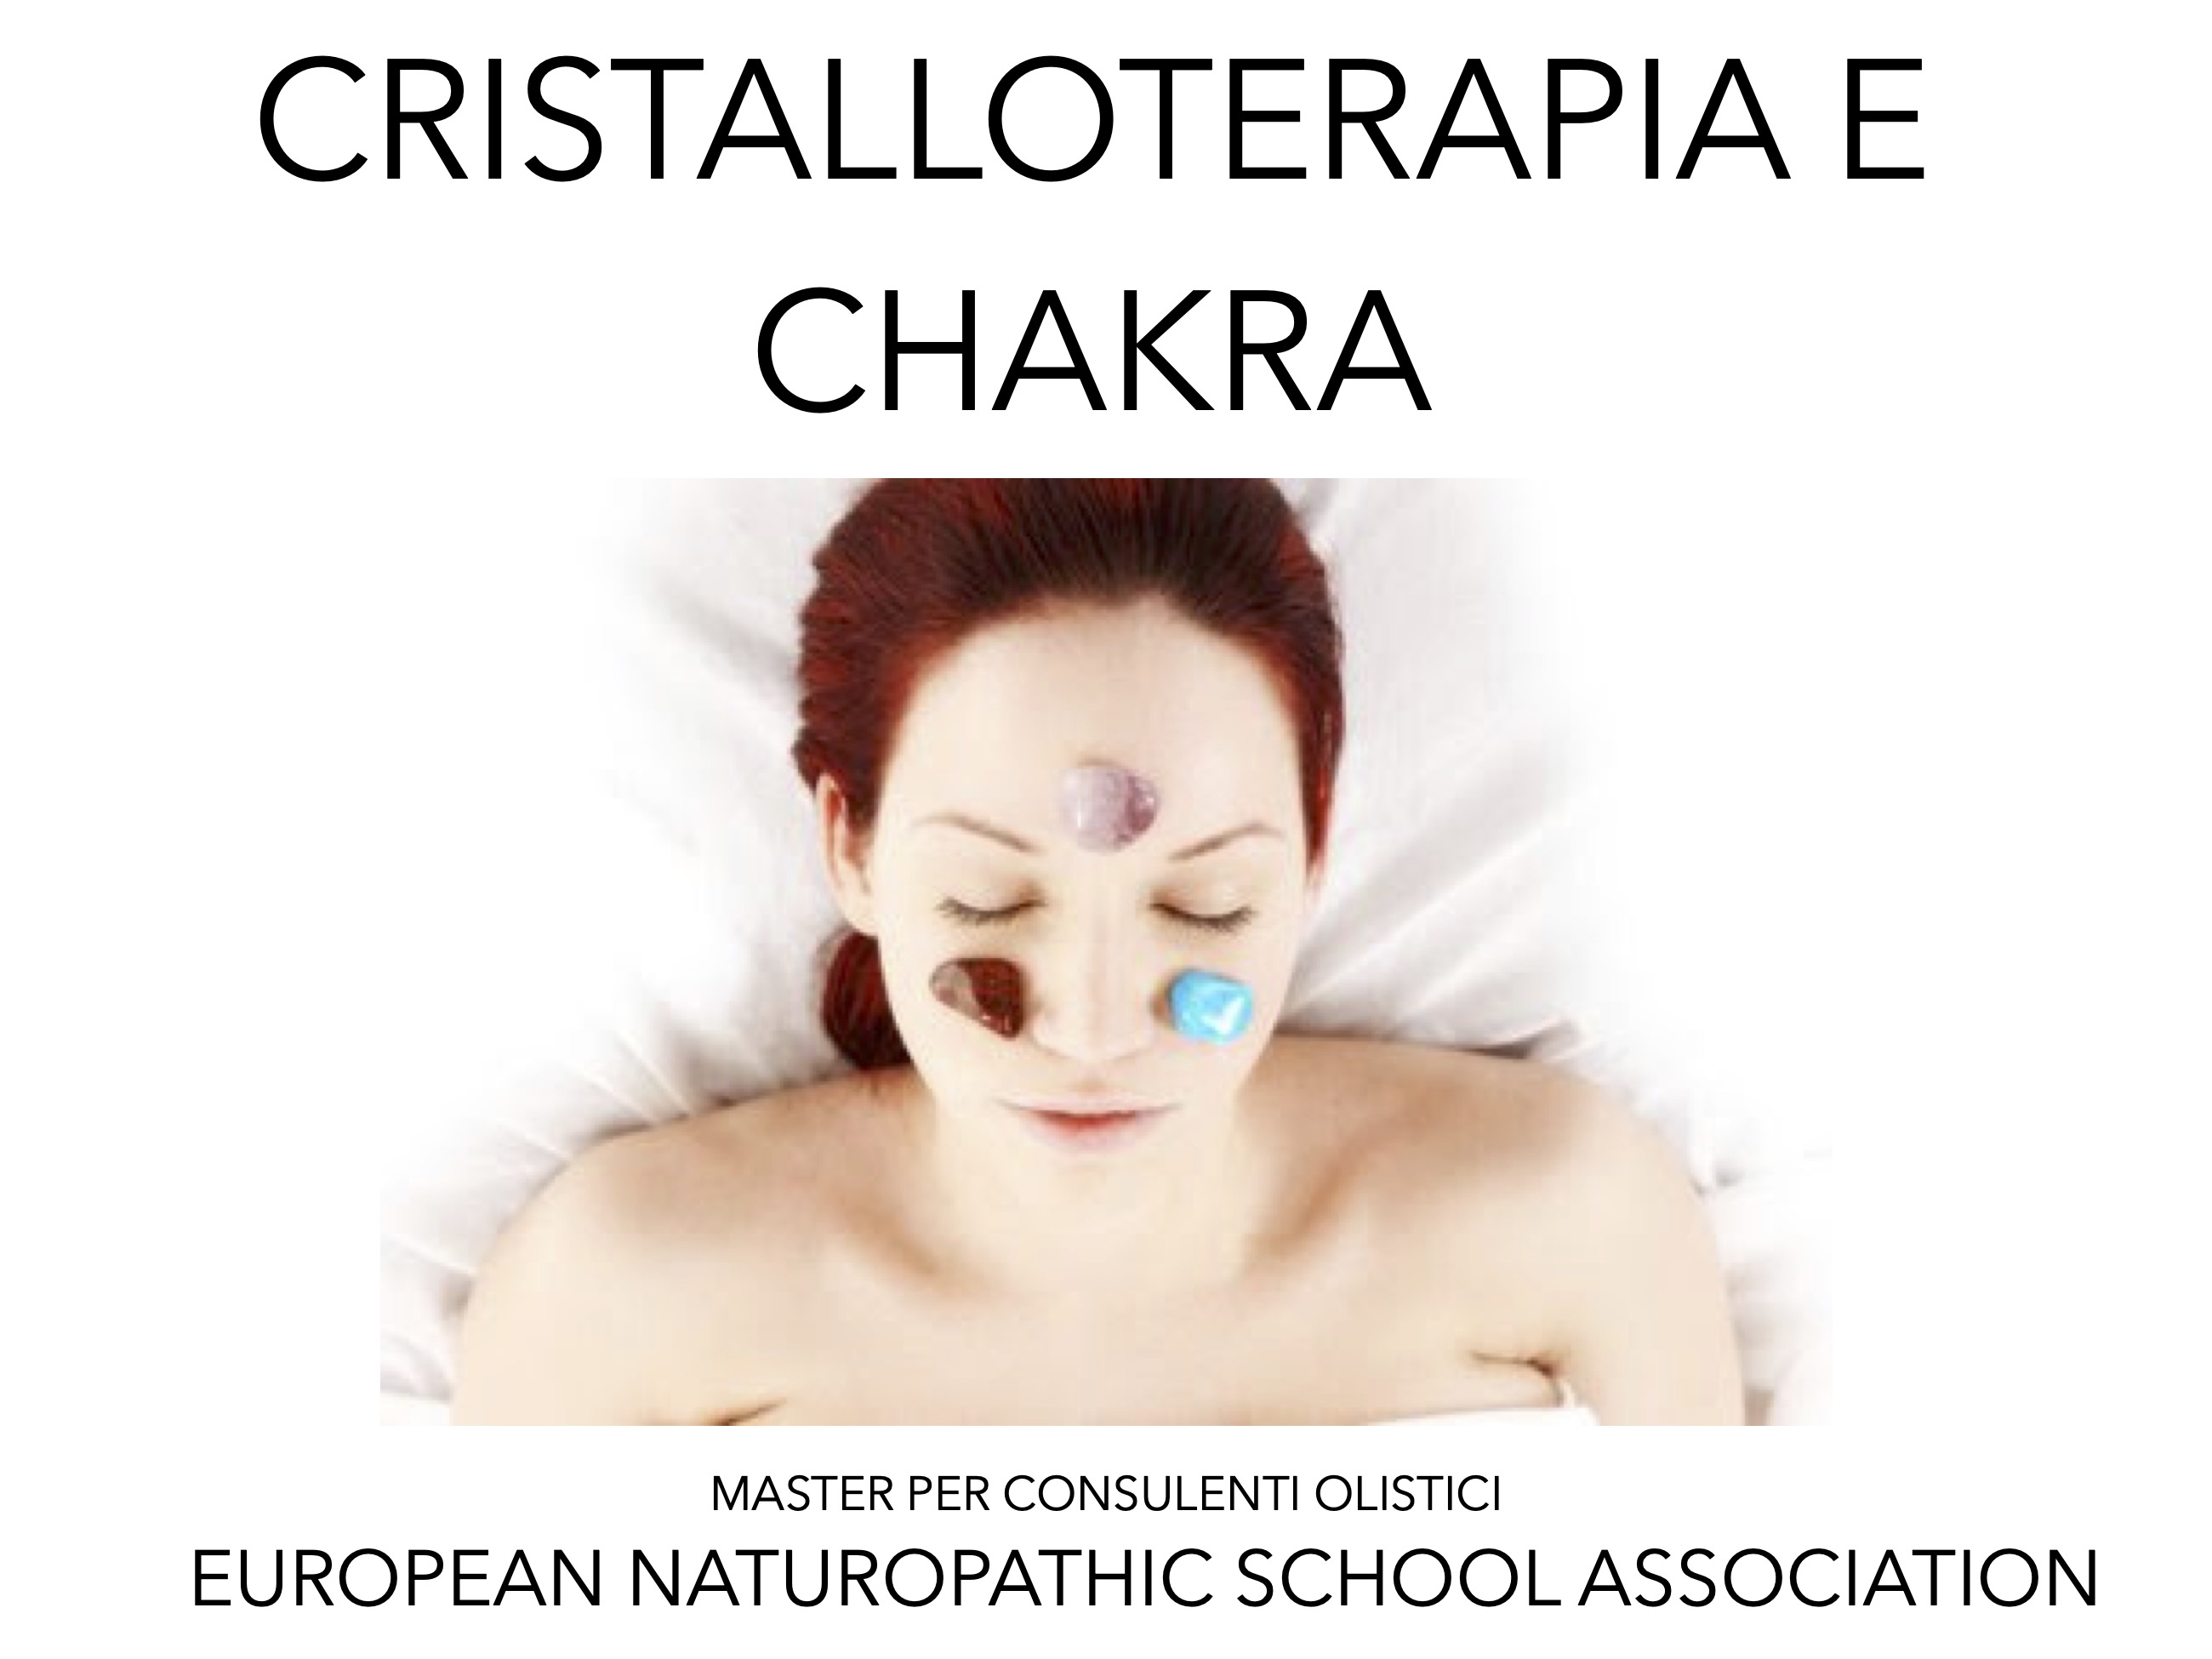 Cristalloterapia e chakra